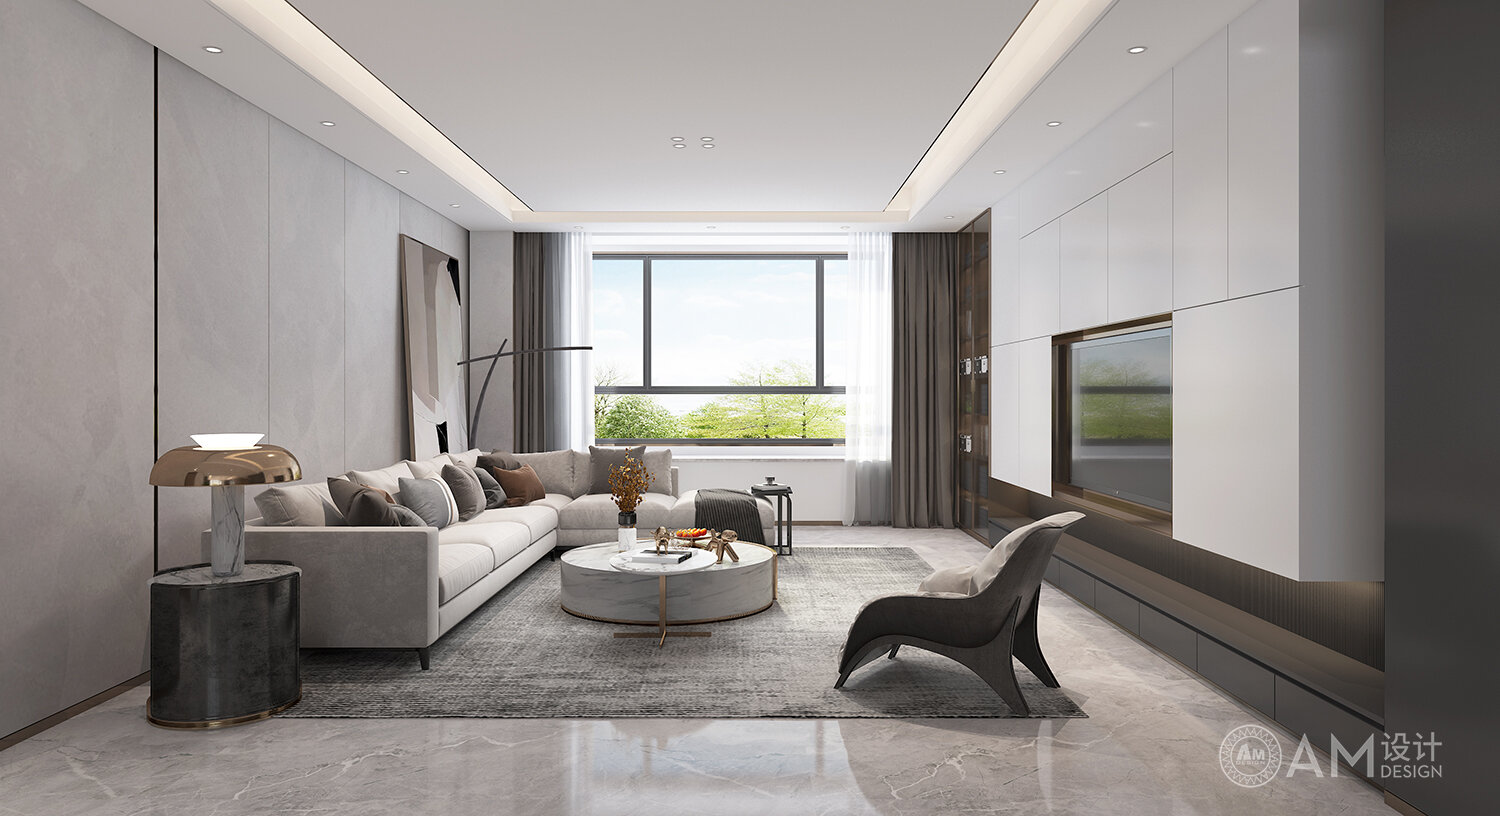 AM DESIGN | Shaanxi Shangluo Mansion Living Room Design